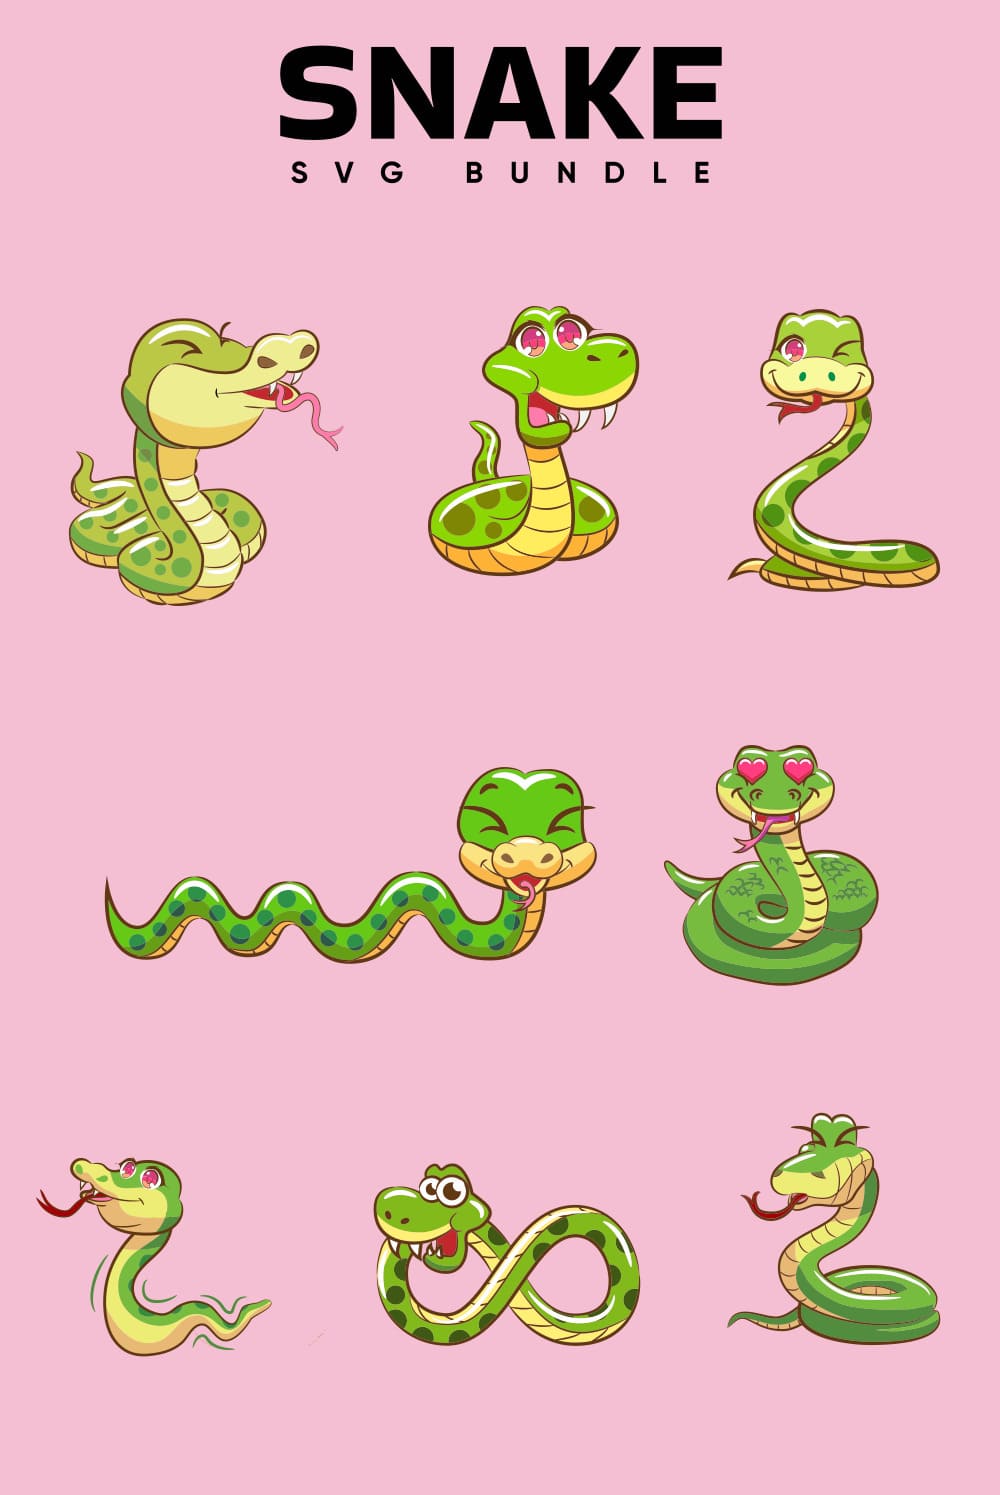 Snake SVG free bundle, picture for pinterest 1000x1500.